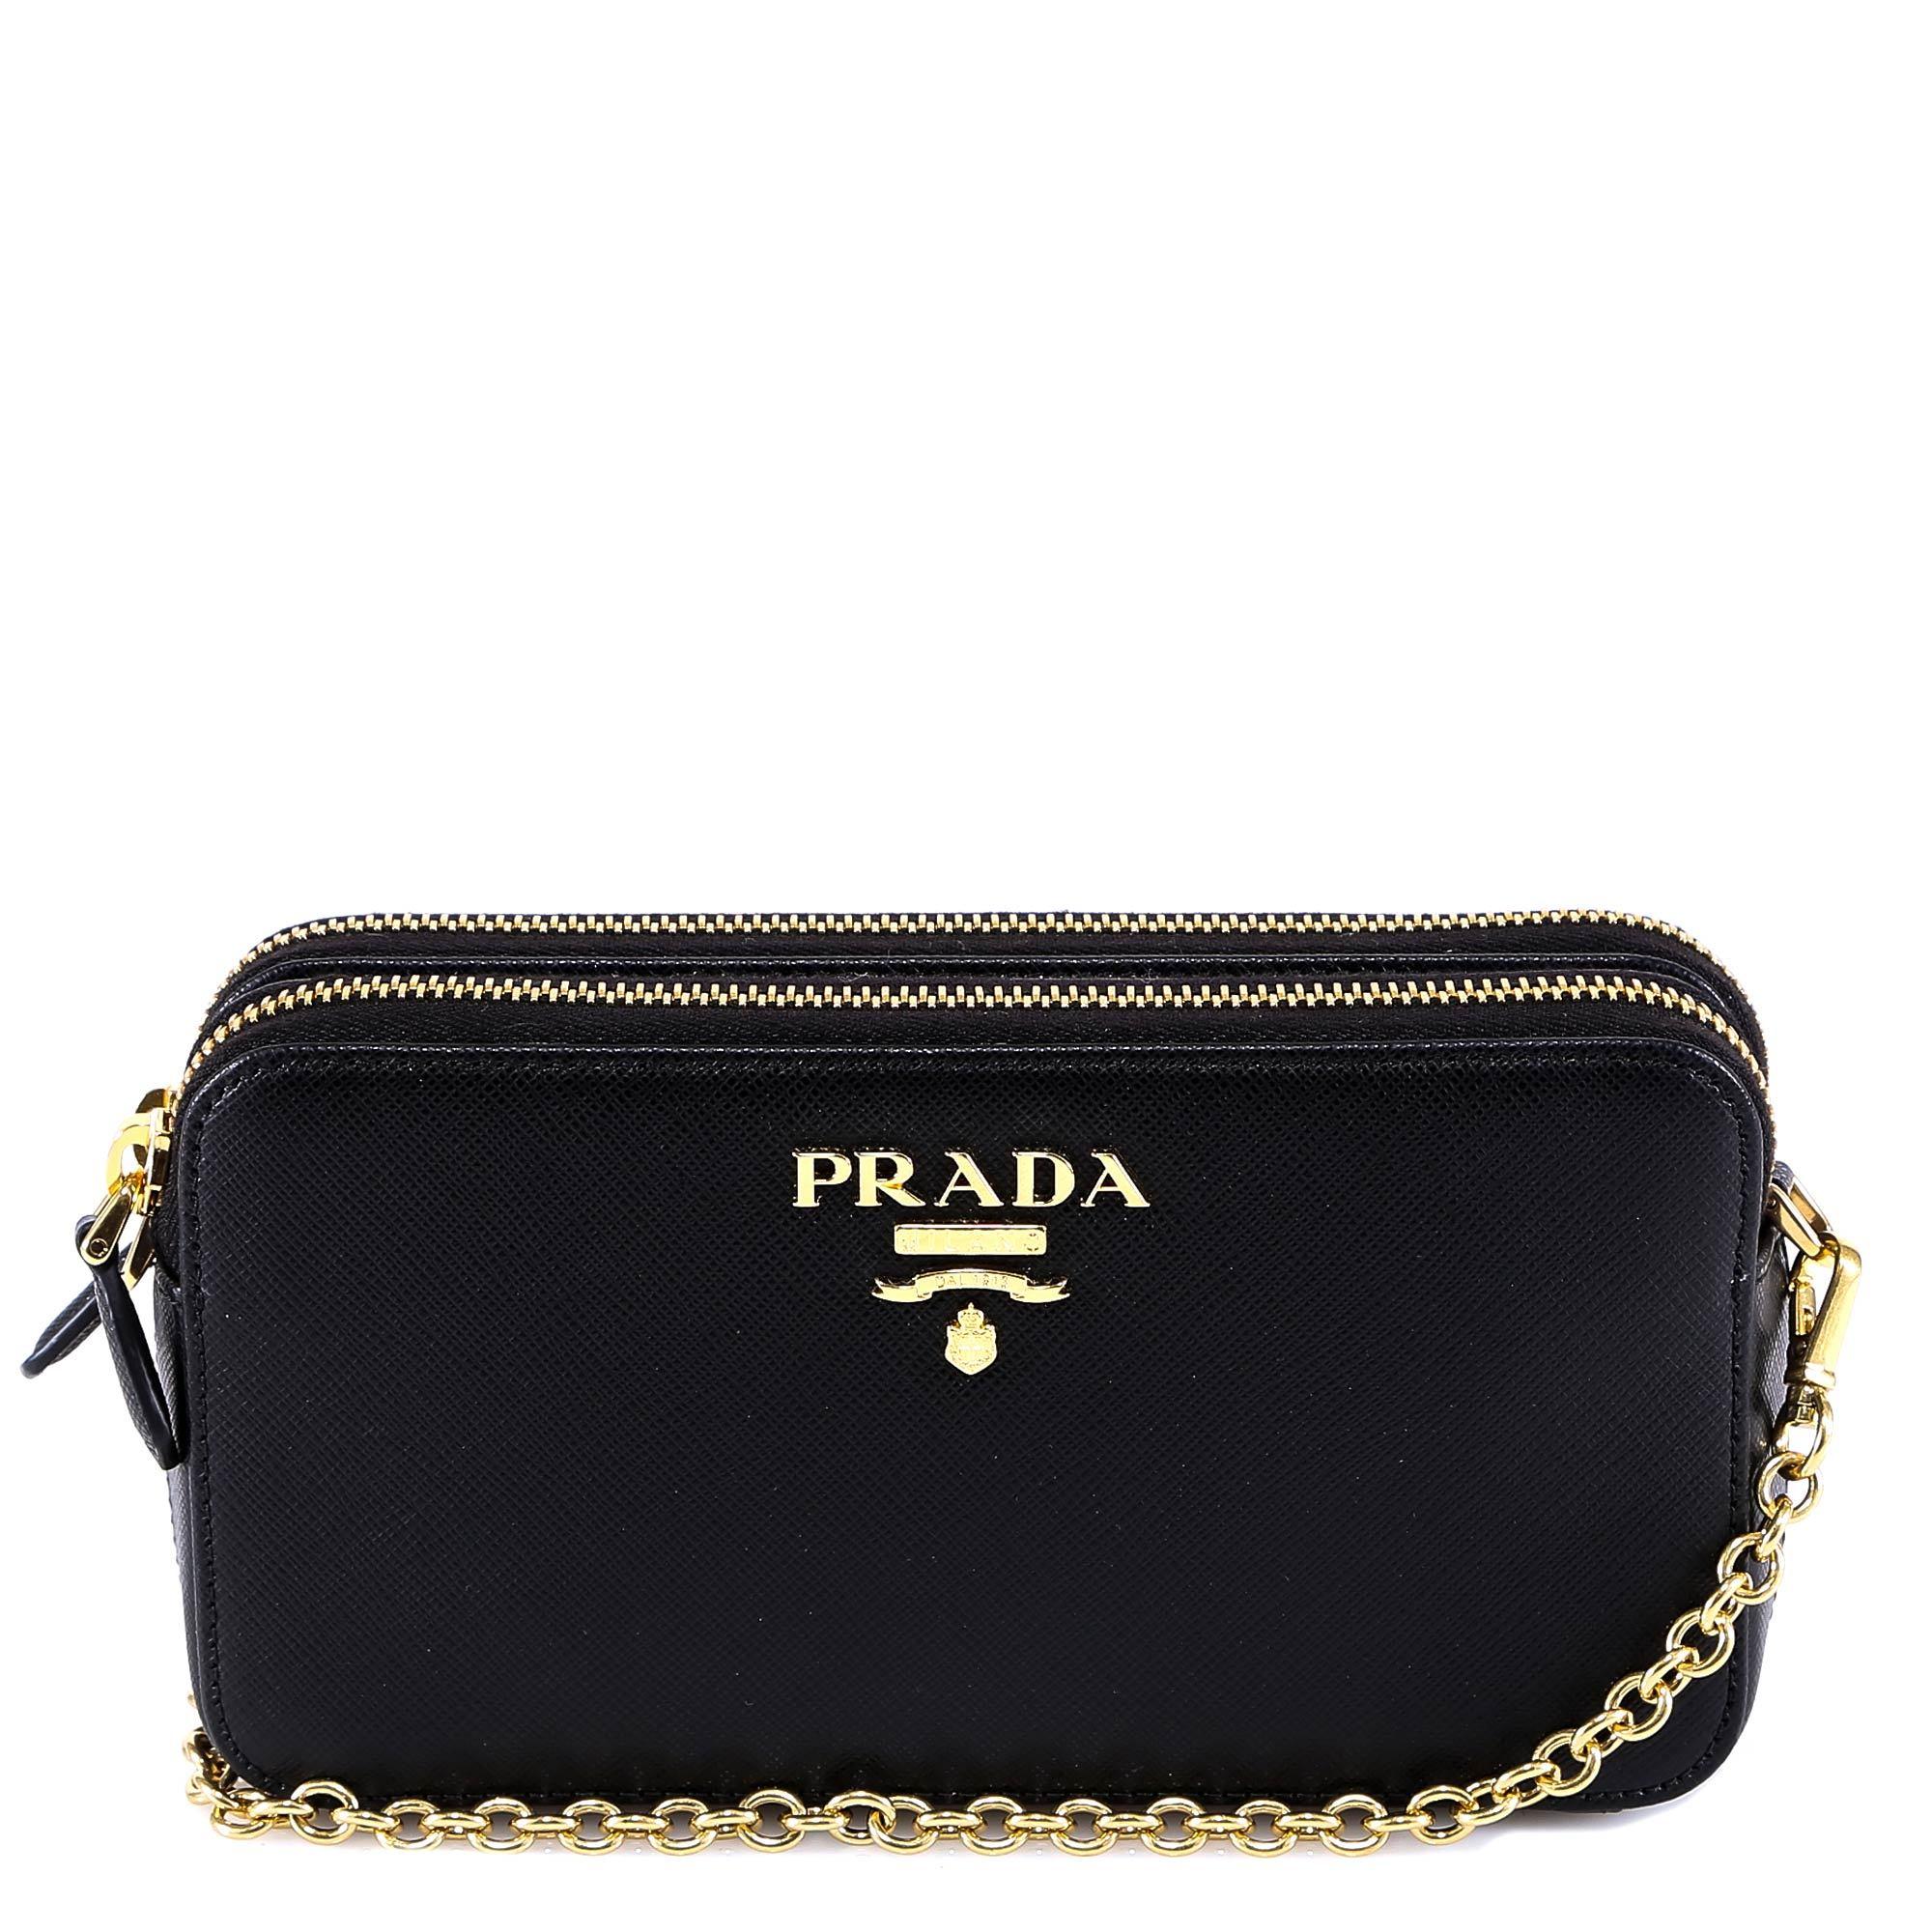 Prada, Bags, Prada Black Wallet With Chain For Crossbody